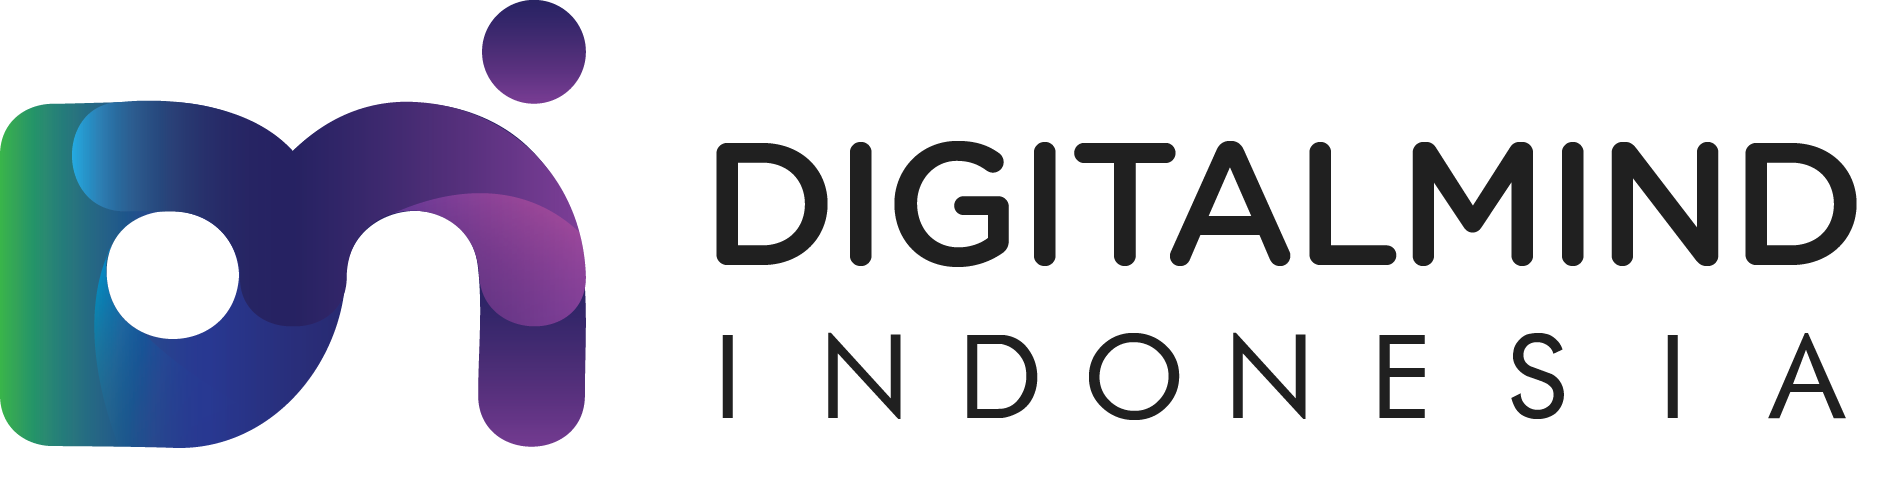 Digitalmind Indonesia